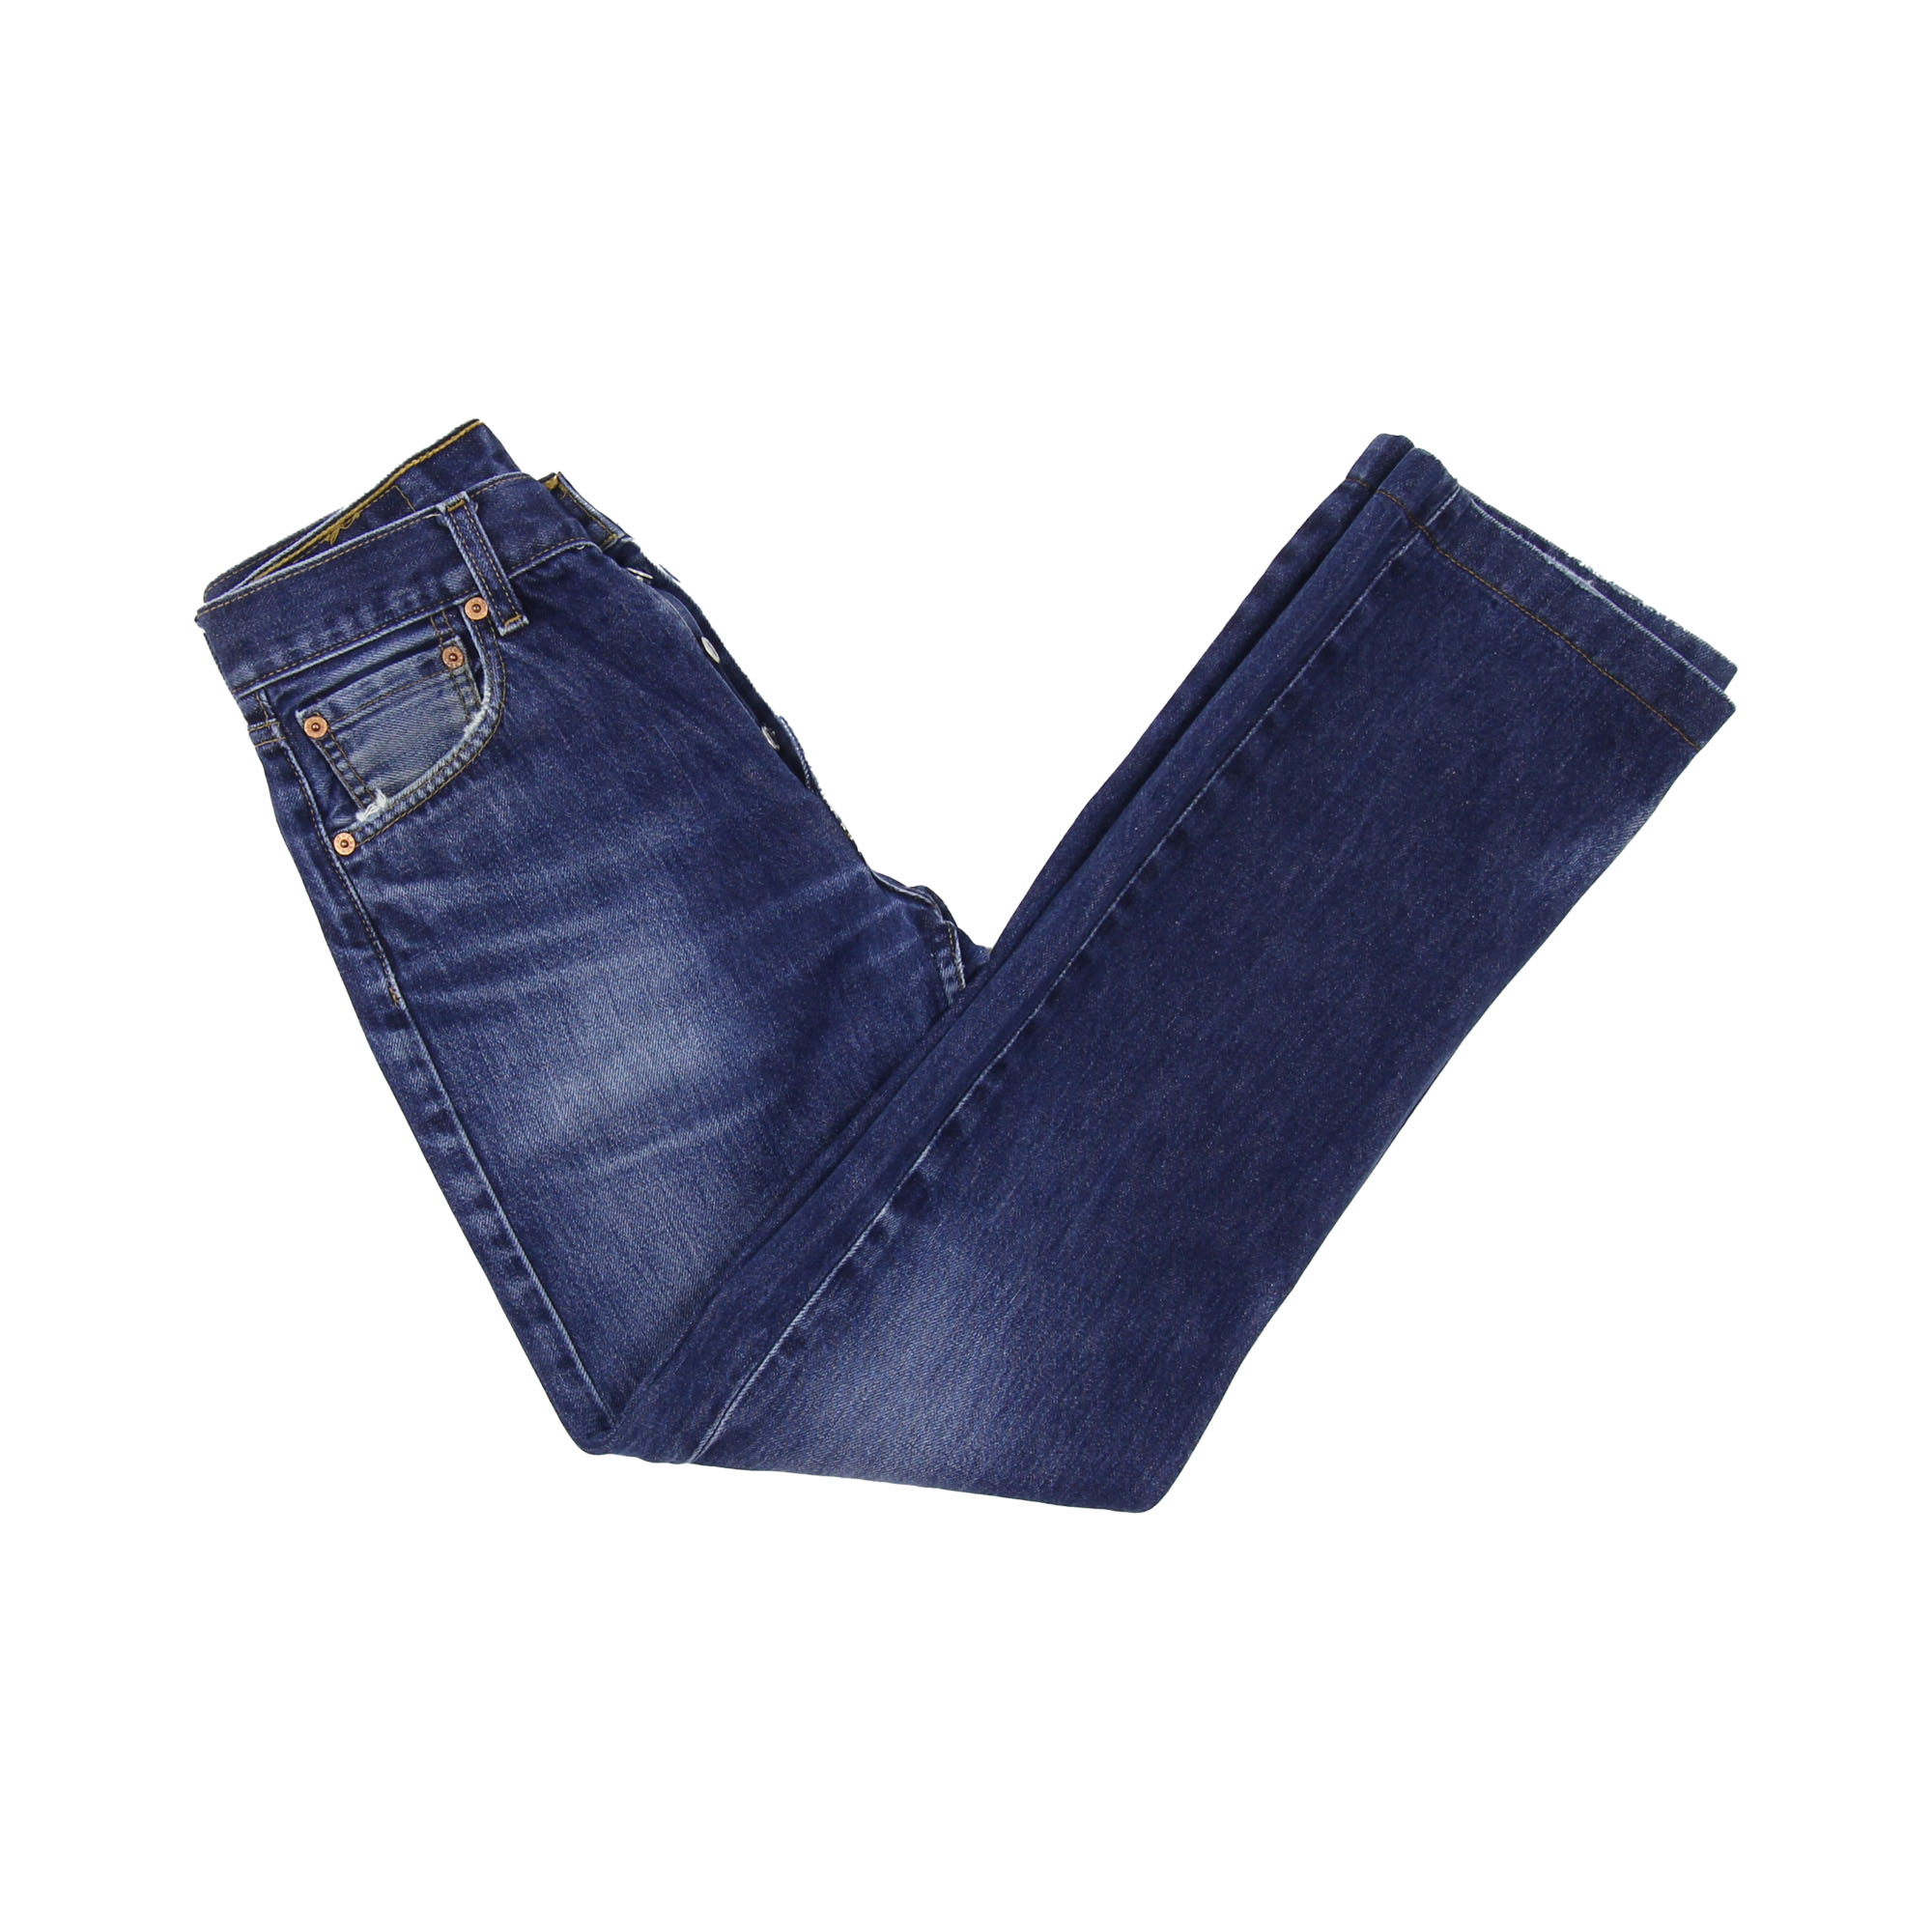 Levi's 501 Jeans -  W28 L34